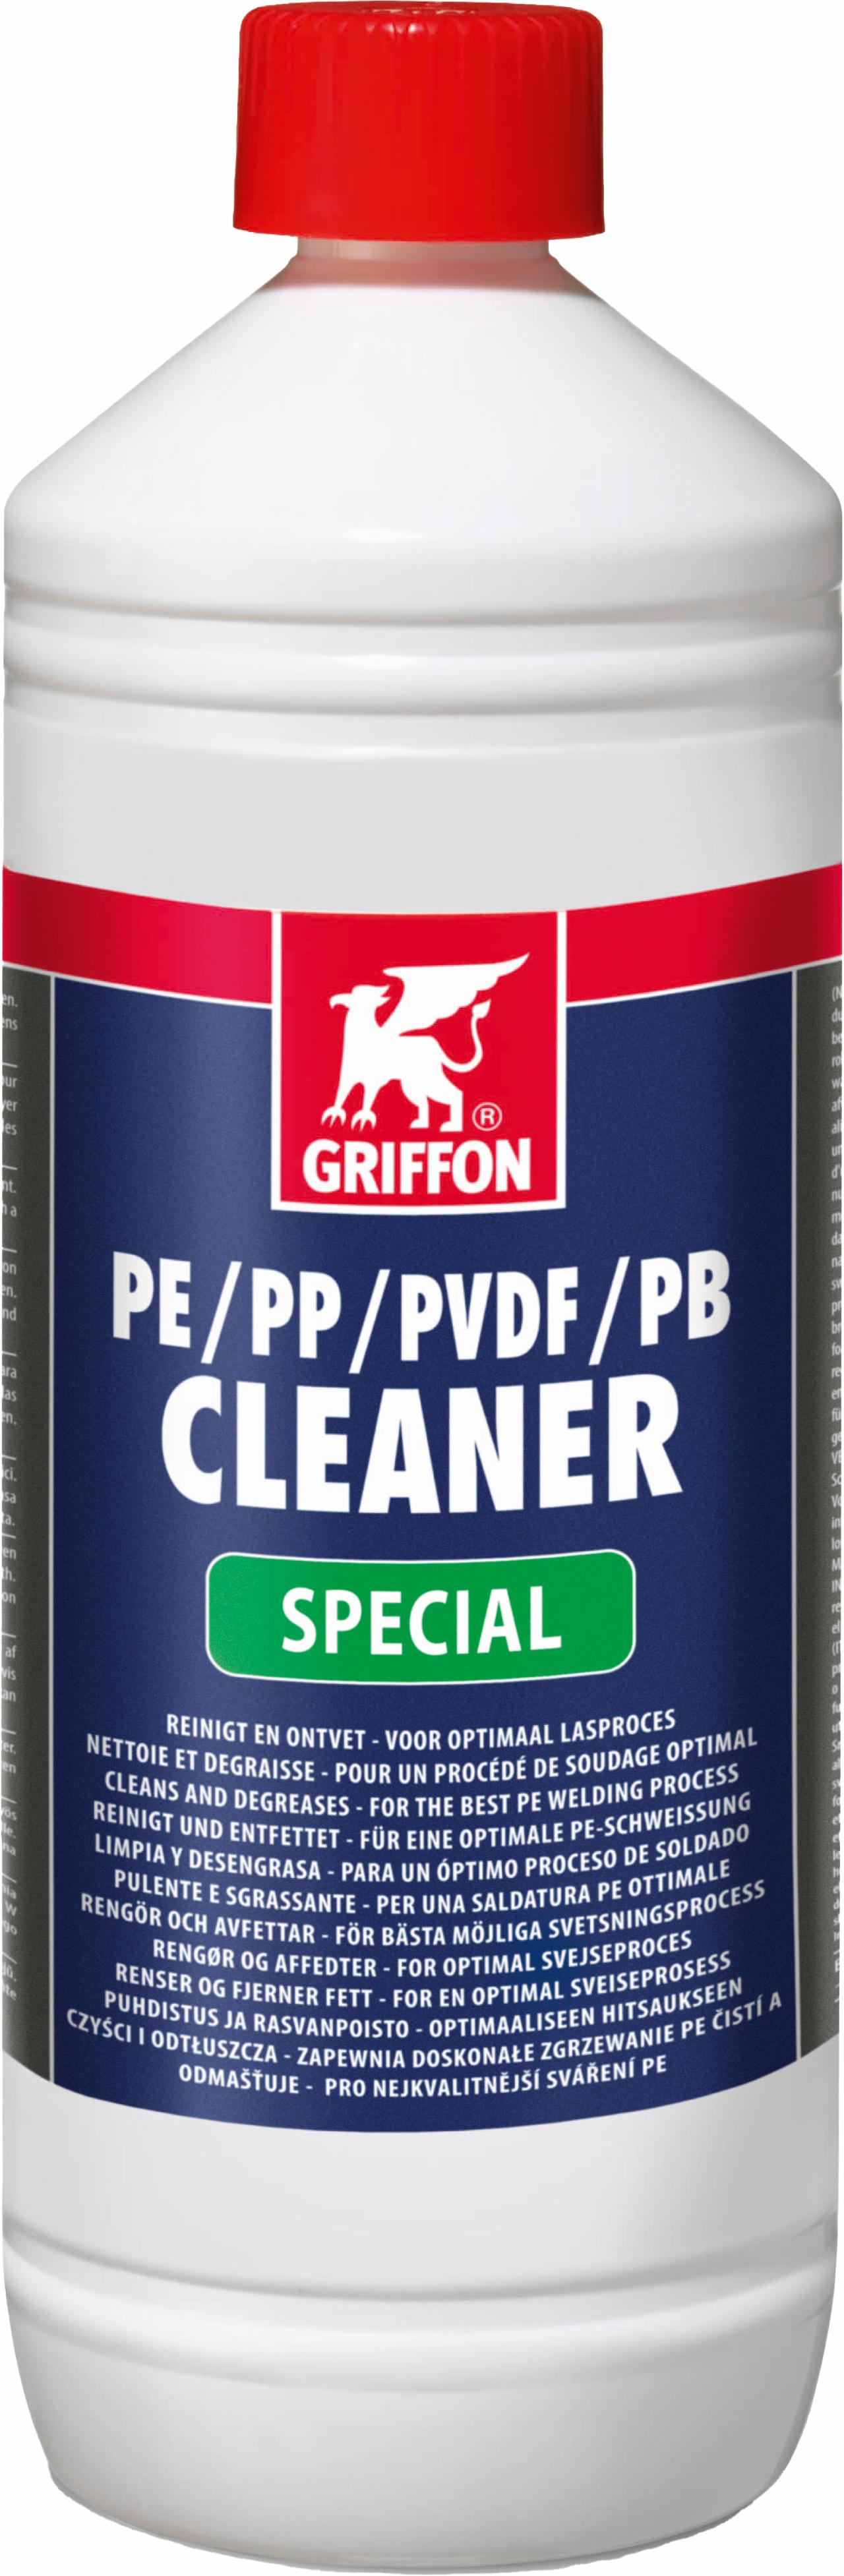 Cleaner PE 1l Griffon